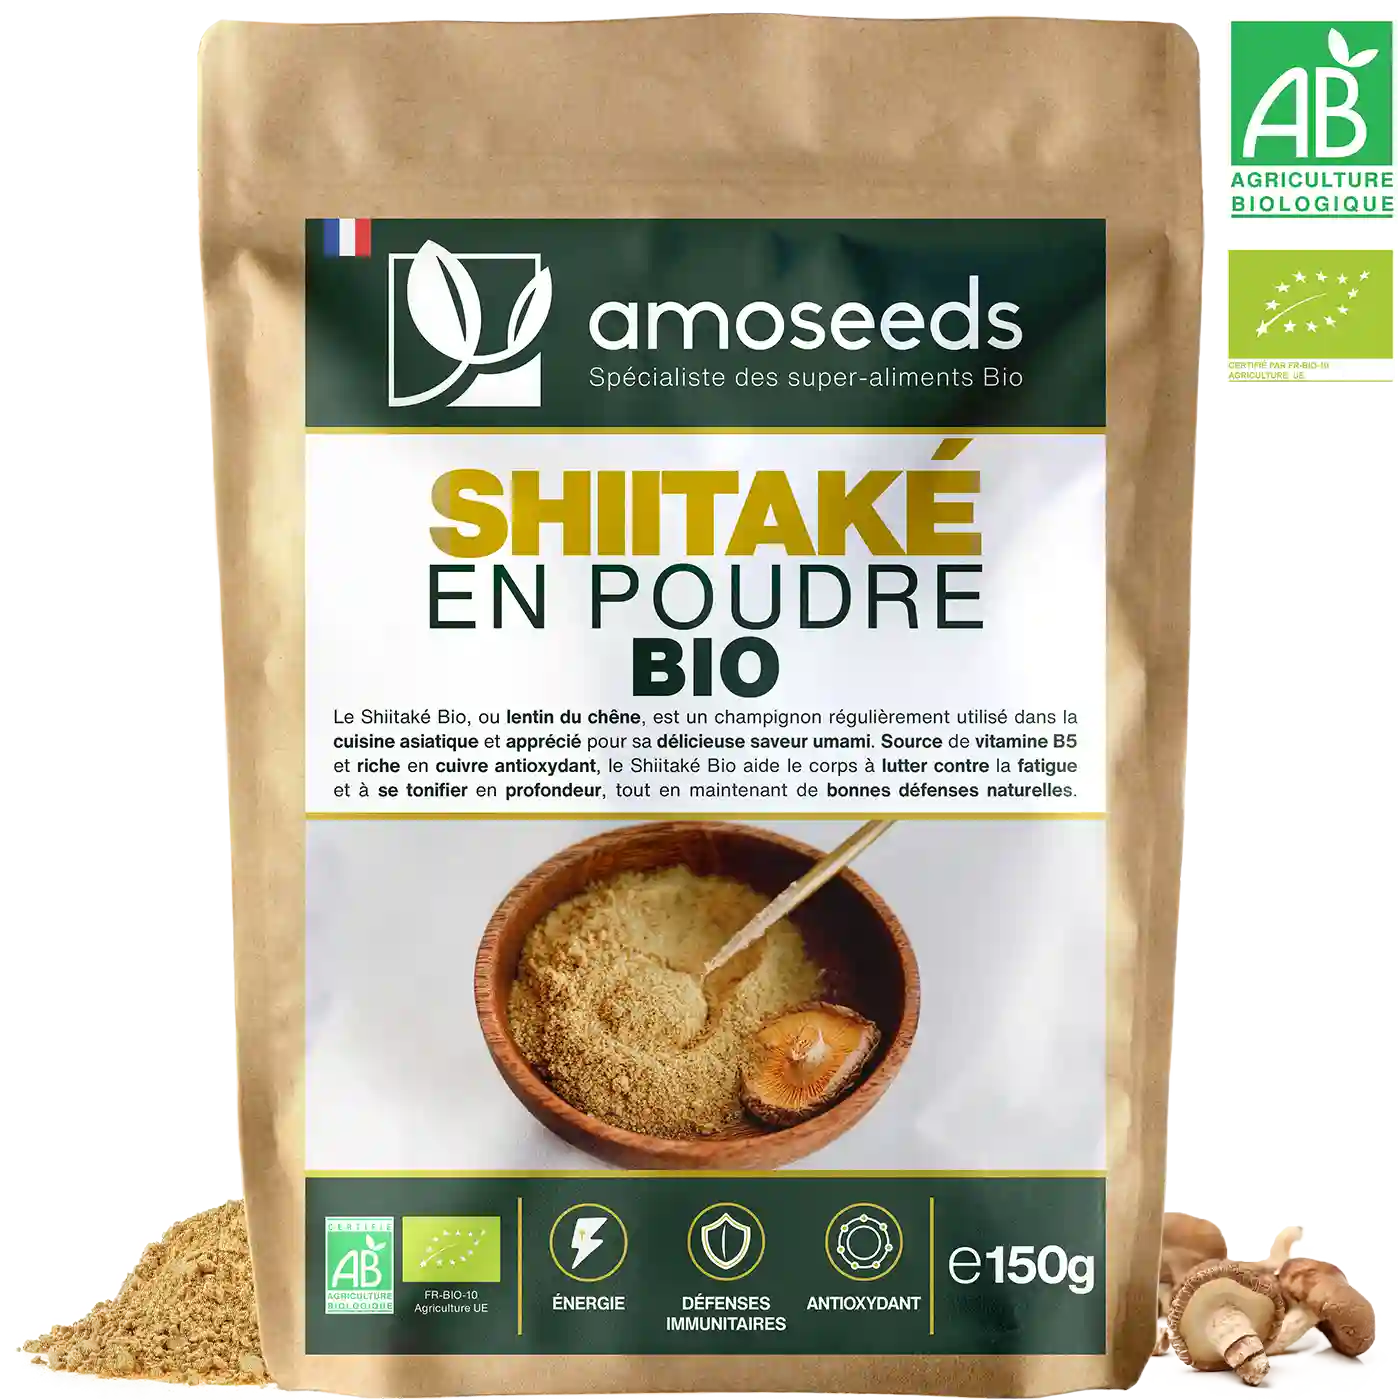 Shiitake en poudre bio 150G amoseeds specialiste des super aliments bio